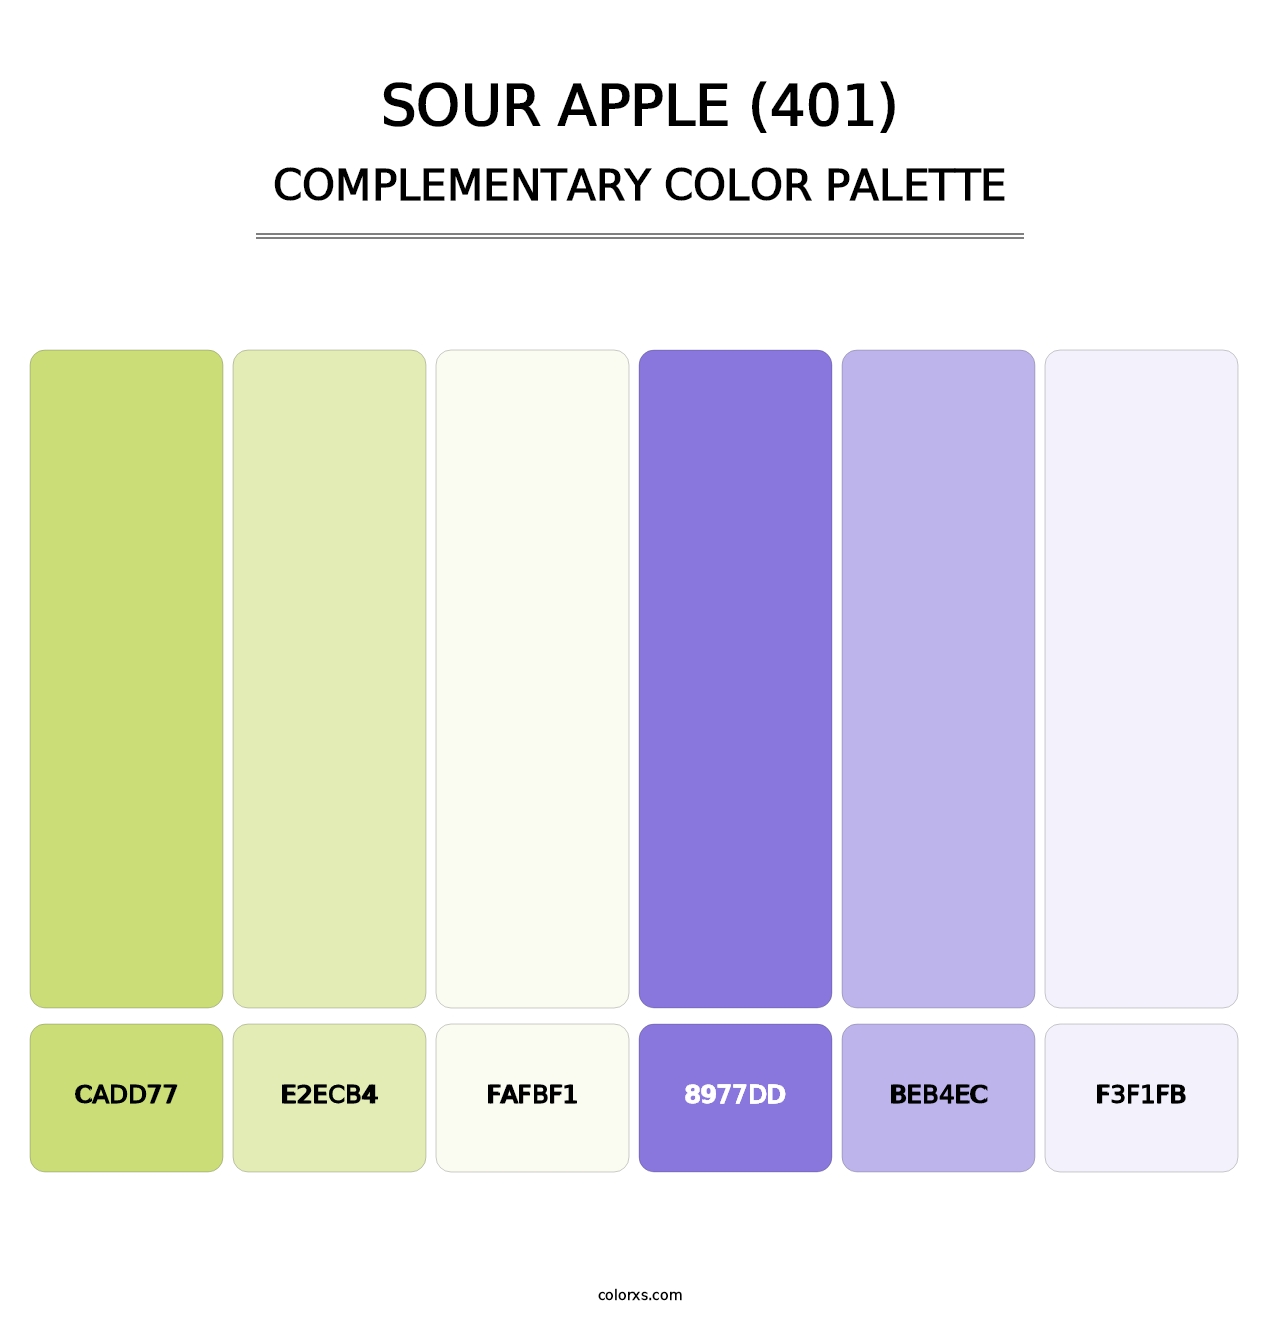 Sour Apple (401) - Complementary Color Palette